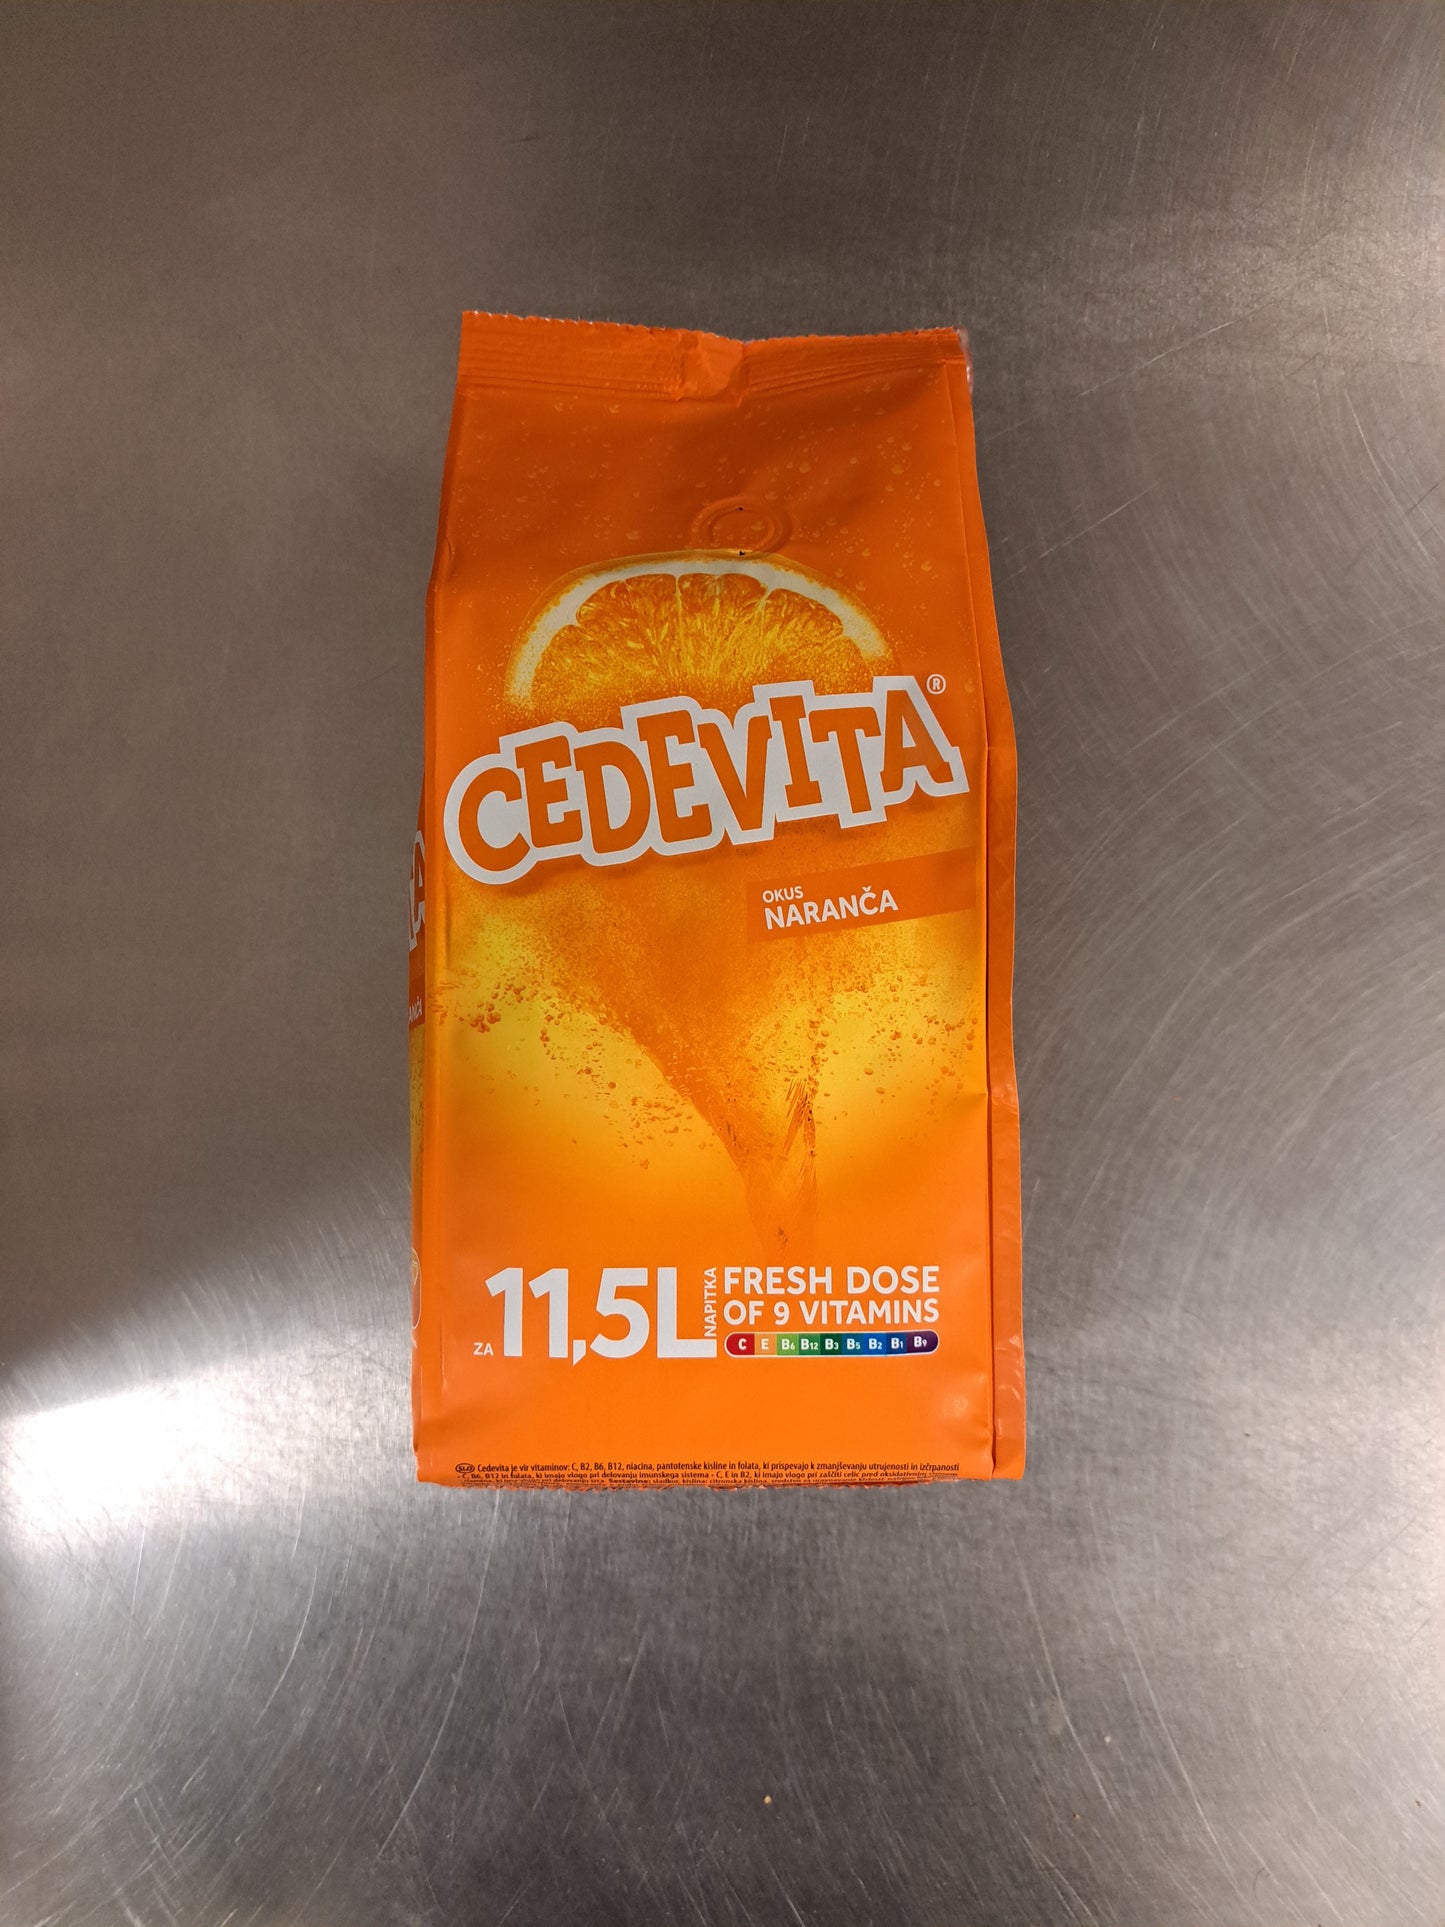 Cedevita Apelsin - Naranca/Narandza 900g